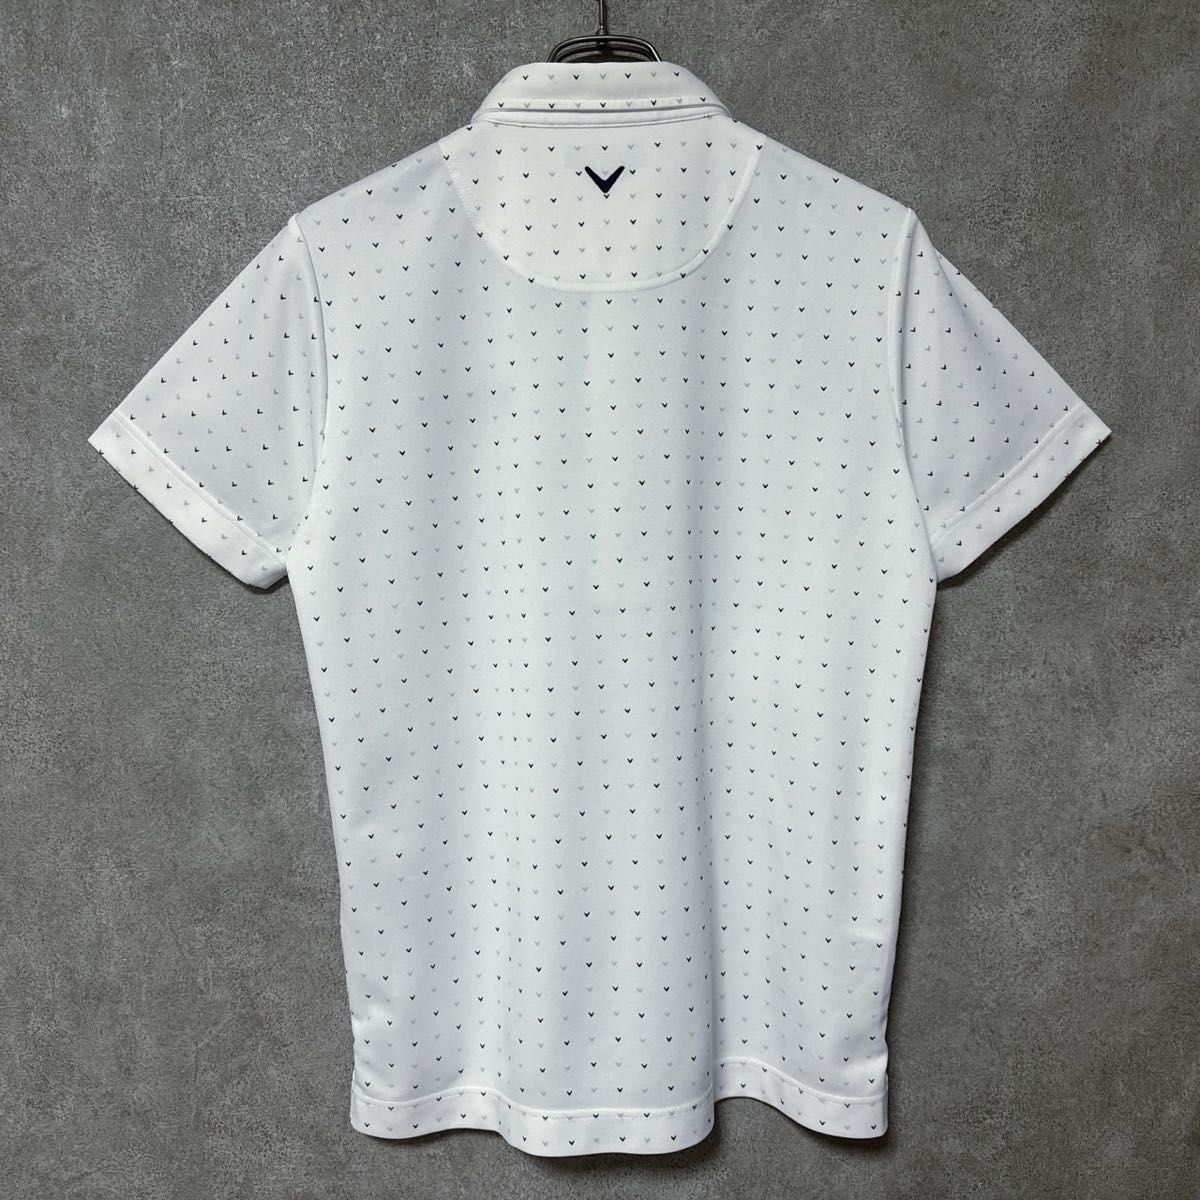 Callaway キャロウェイ ロゴ 半袖 ポロシャツ ゴルフ ウェア 柄 人気 デザイン 襟付き シャツ メンズ